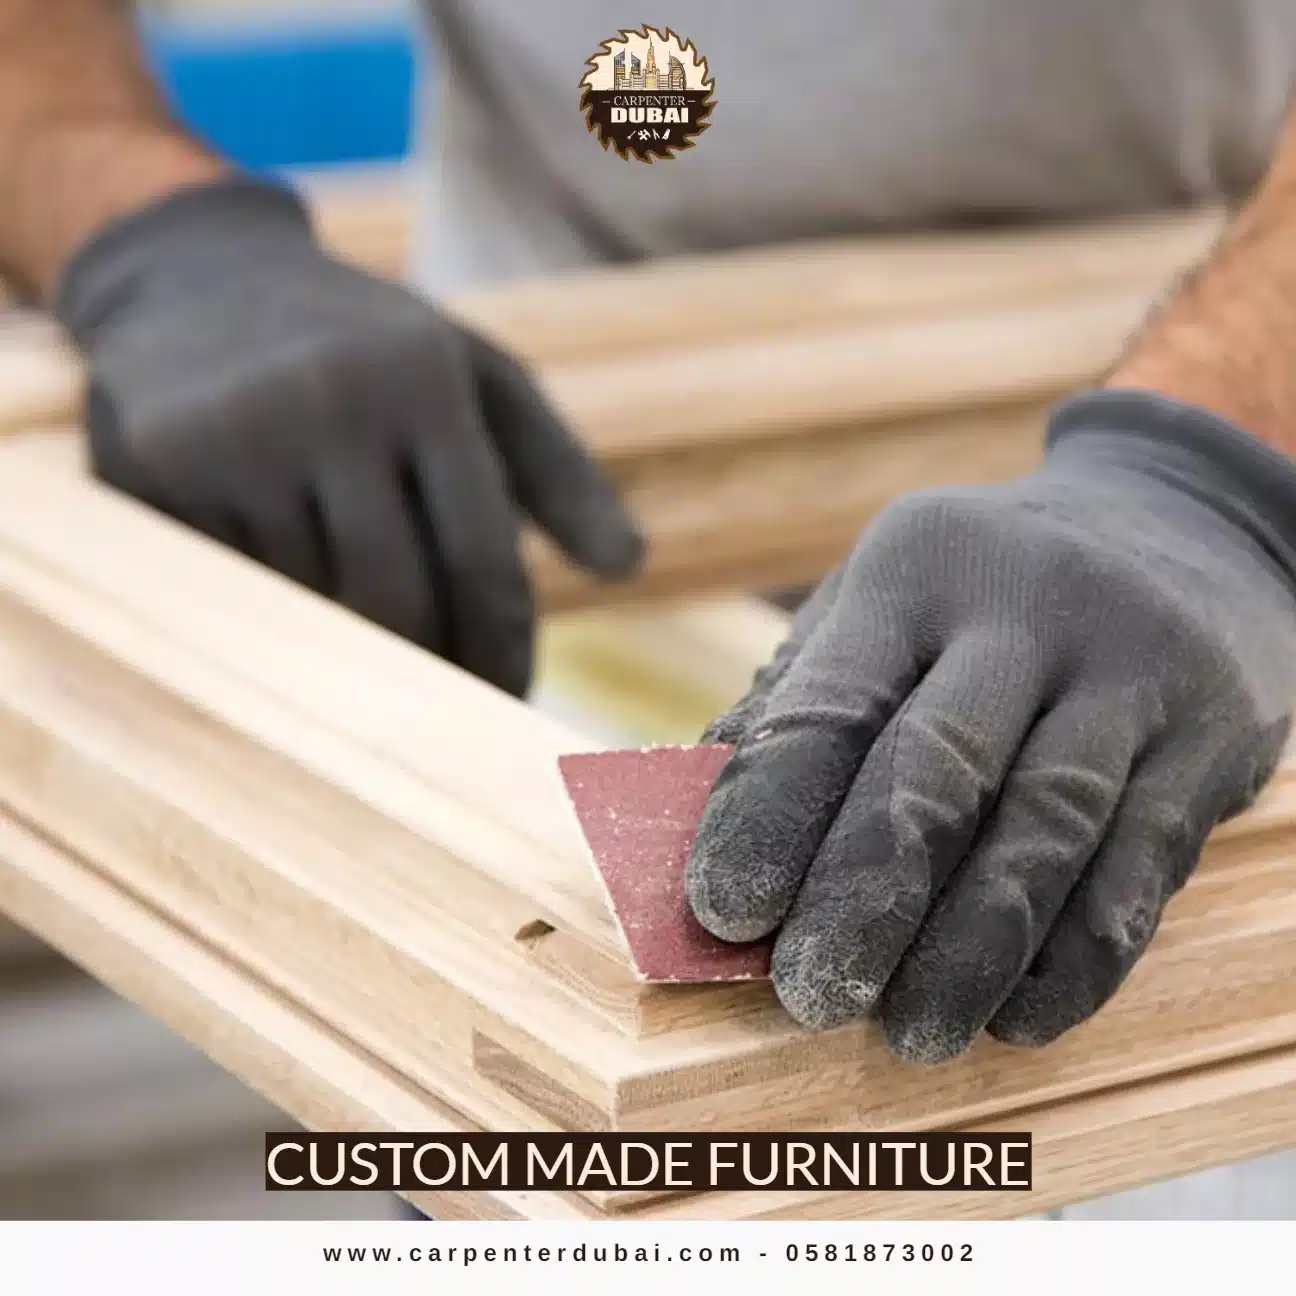 Custom made furniture